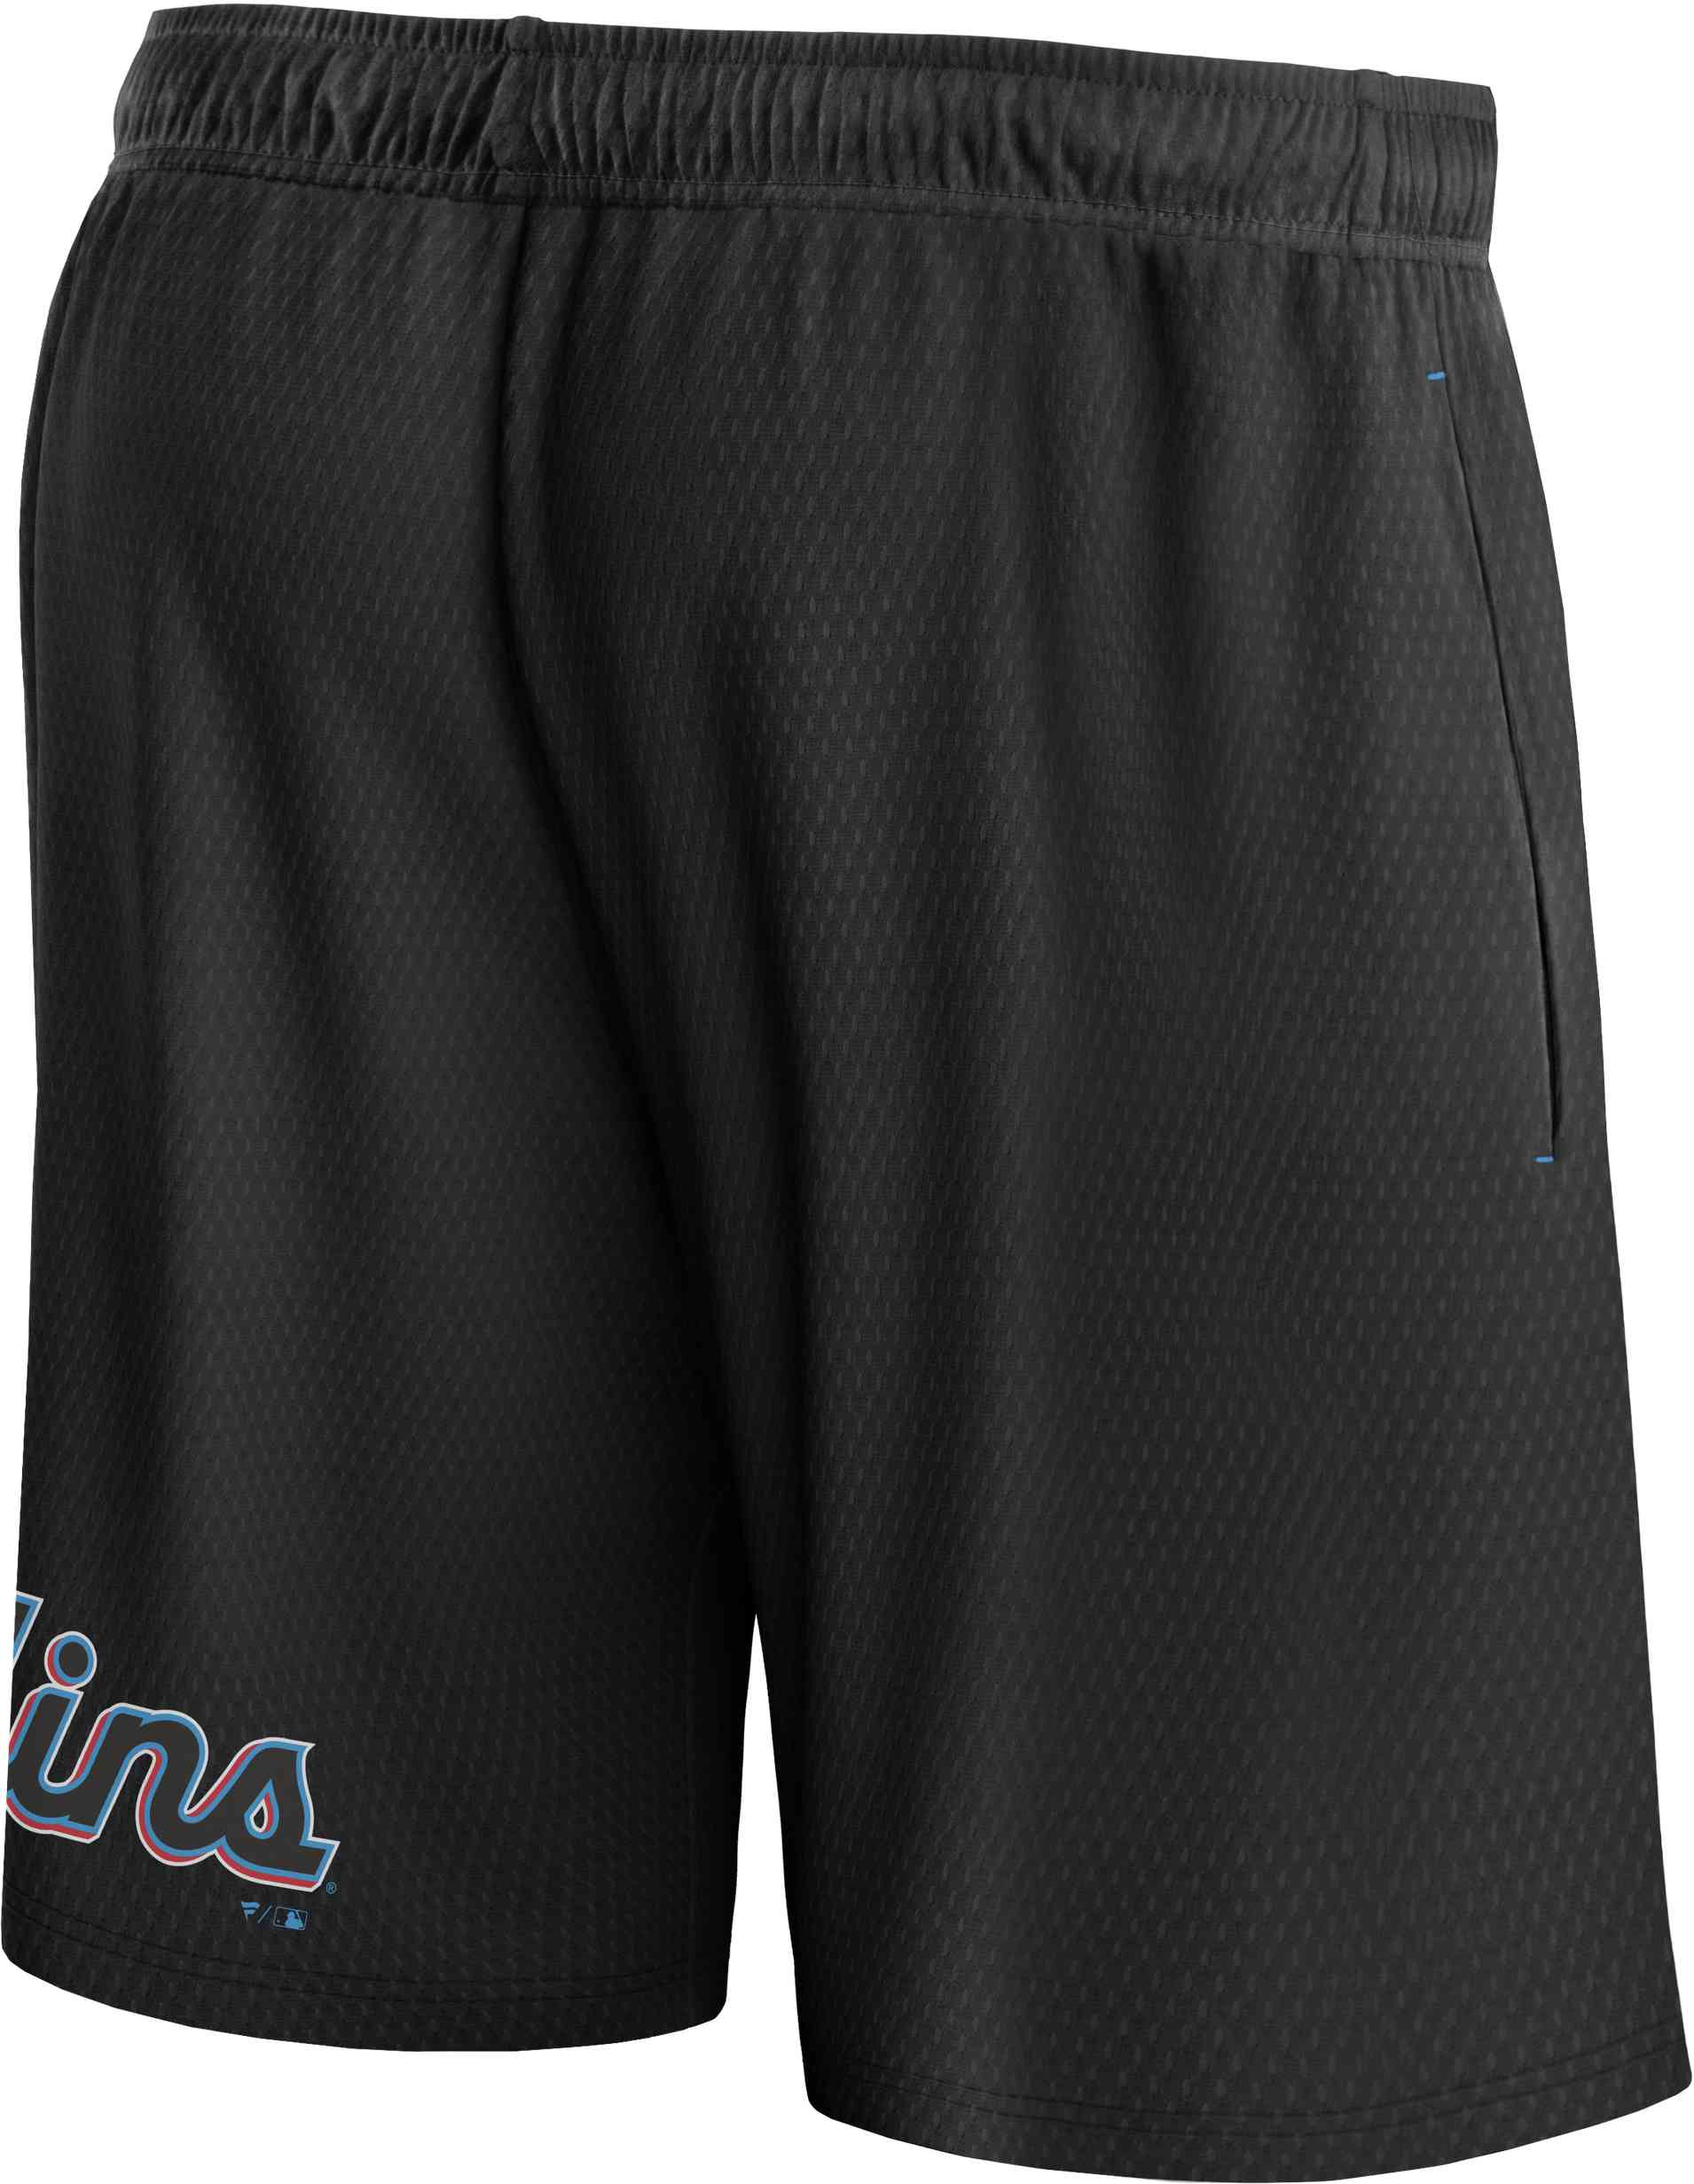 Fanatics - MLB Miami Marlins Mesh Shorts